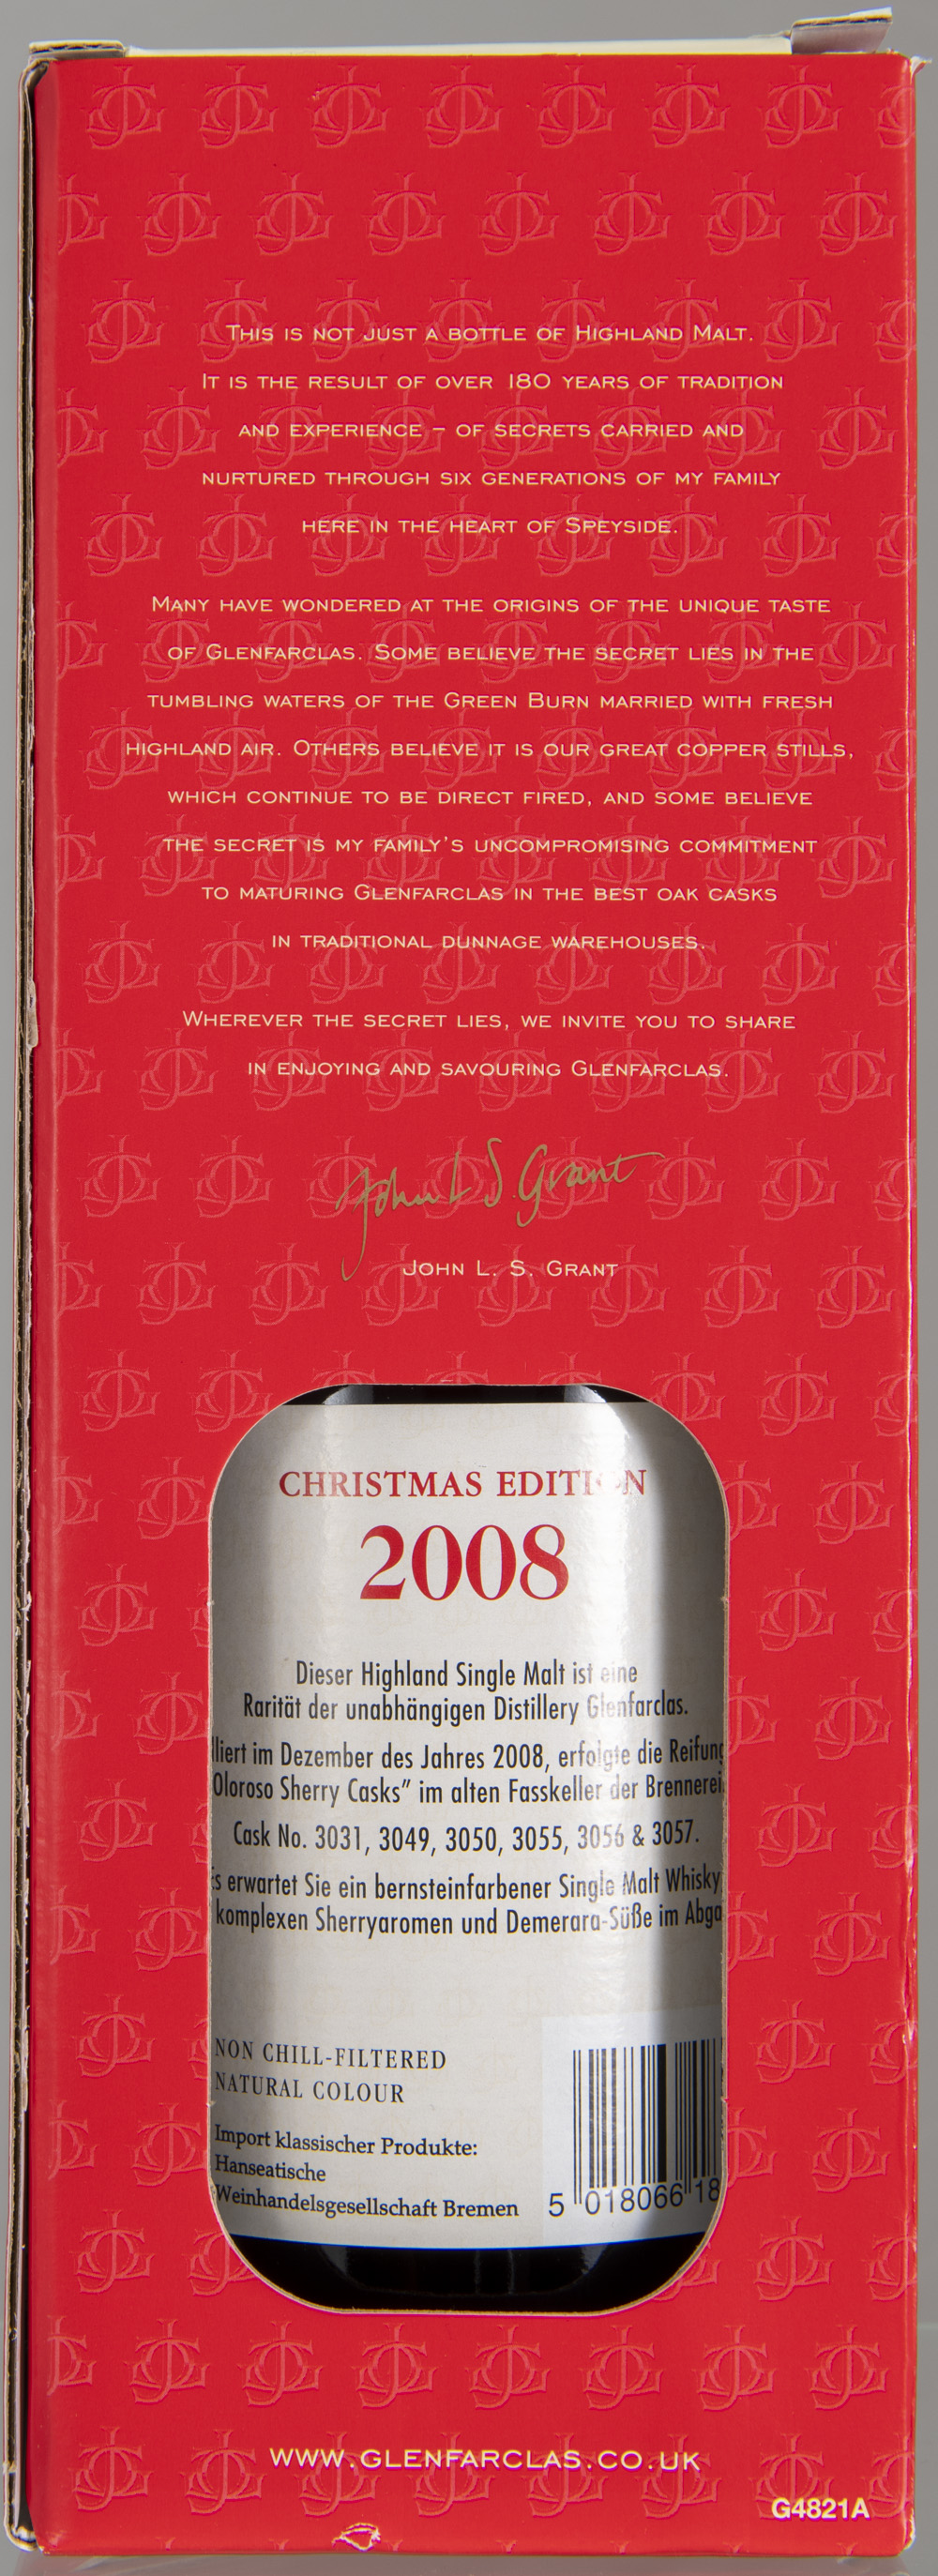 Billede: PHC_2474 - Glenfarclas 2008 Christmas Edition - box back.jpg